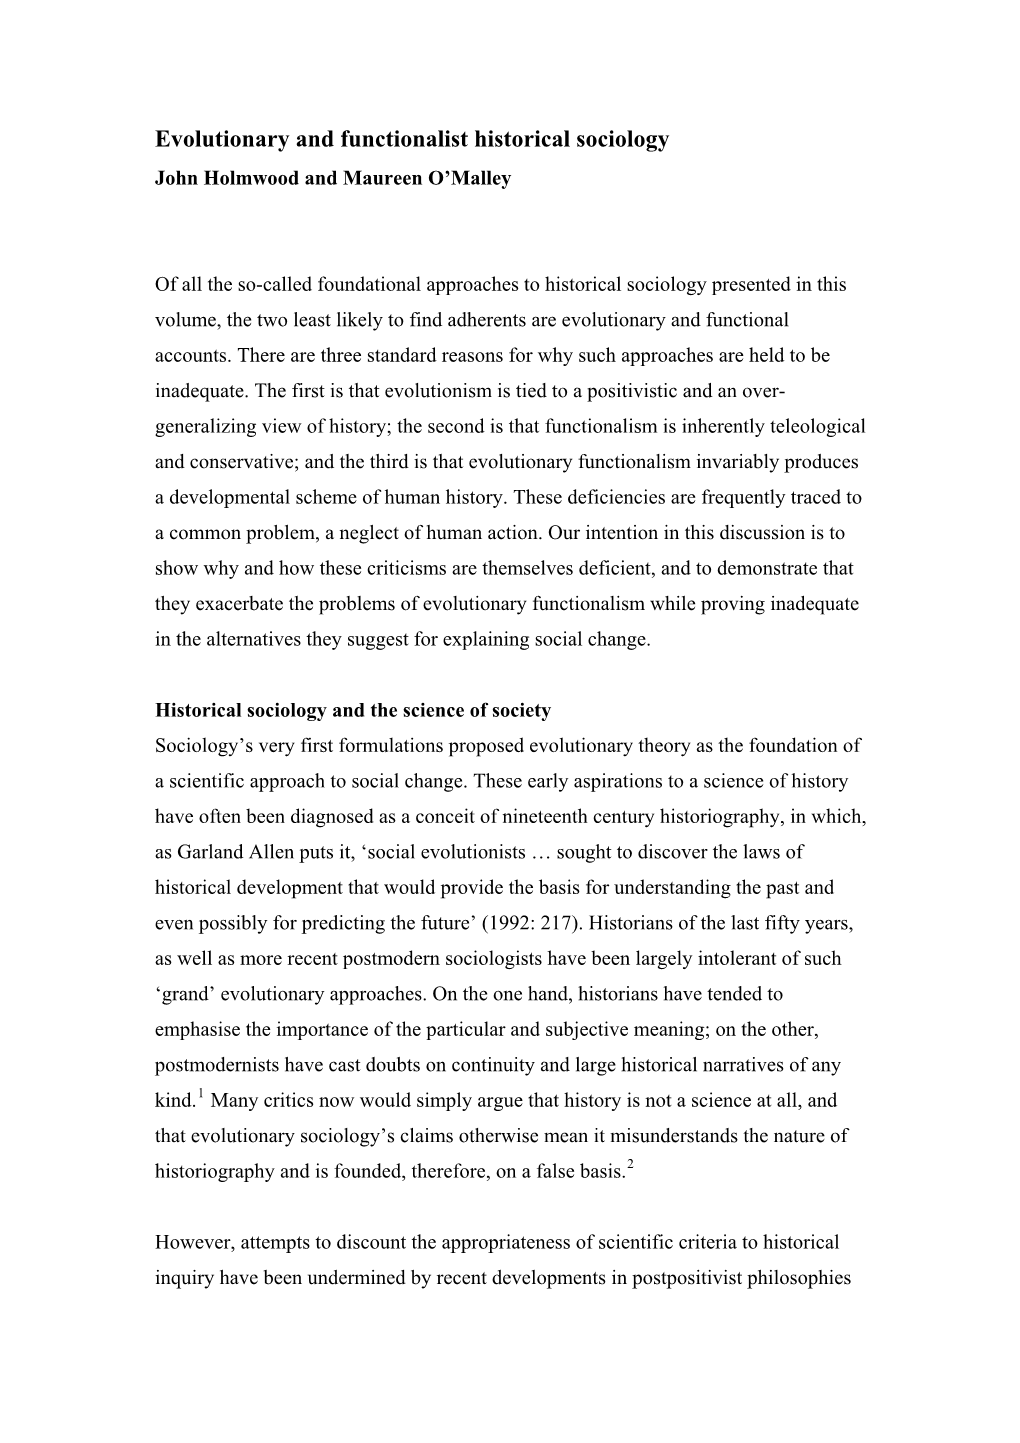 Evolutionary and Functionalist Historical Sociology John Holmwood and Maureen O’Malley